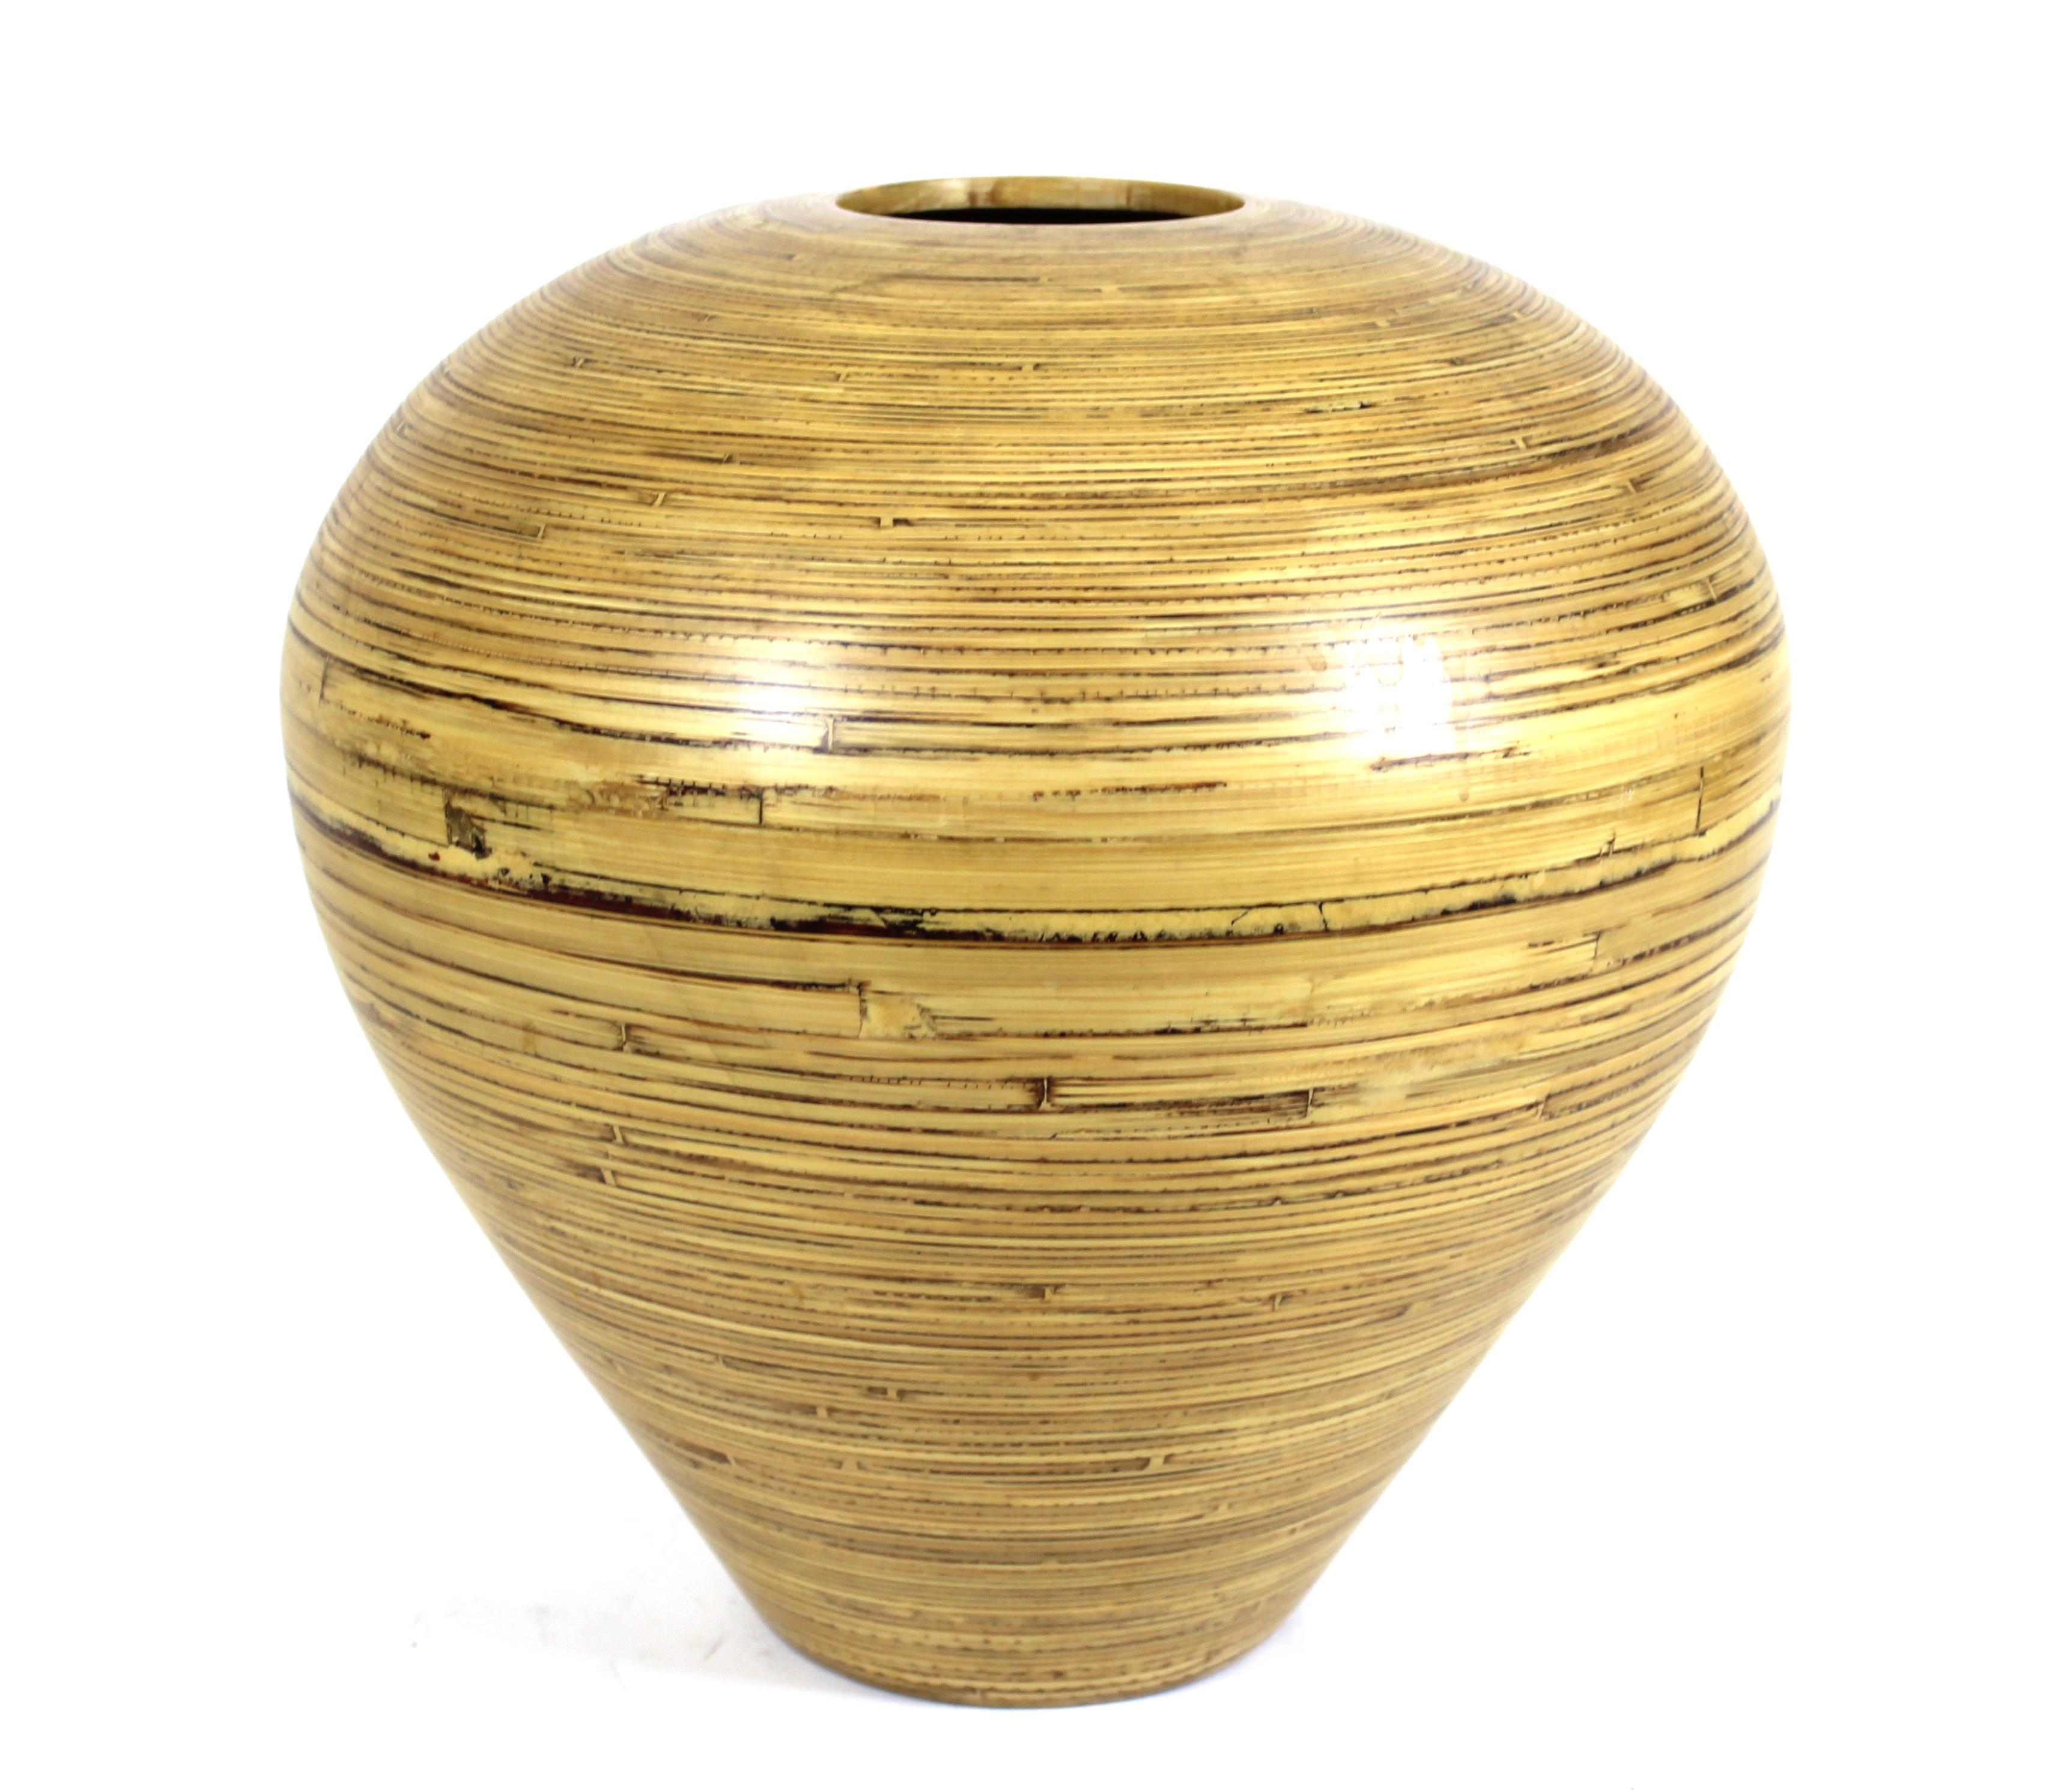 Modern decorative vase made with hand-spun bamboo.